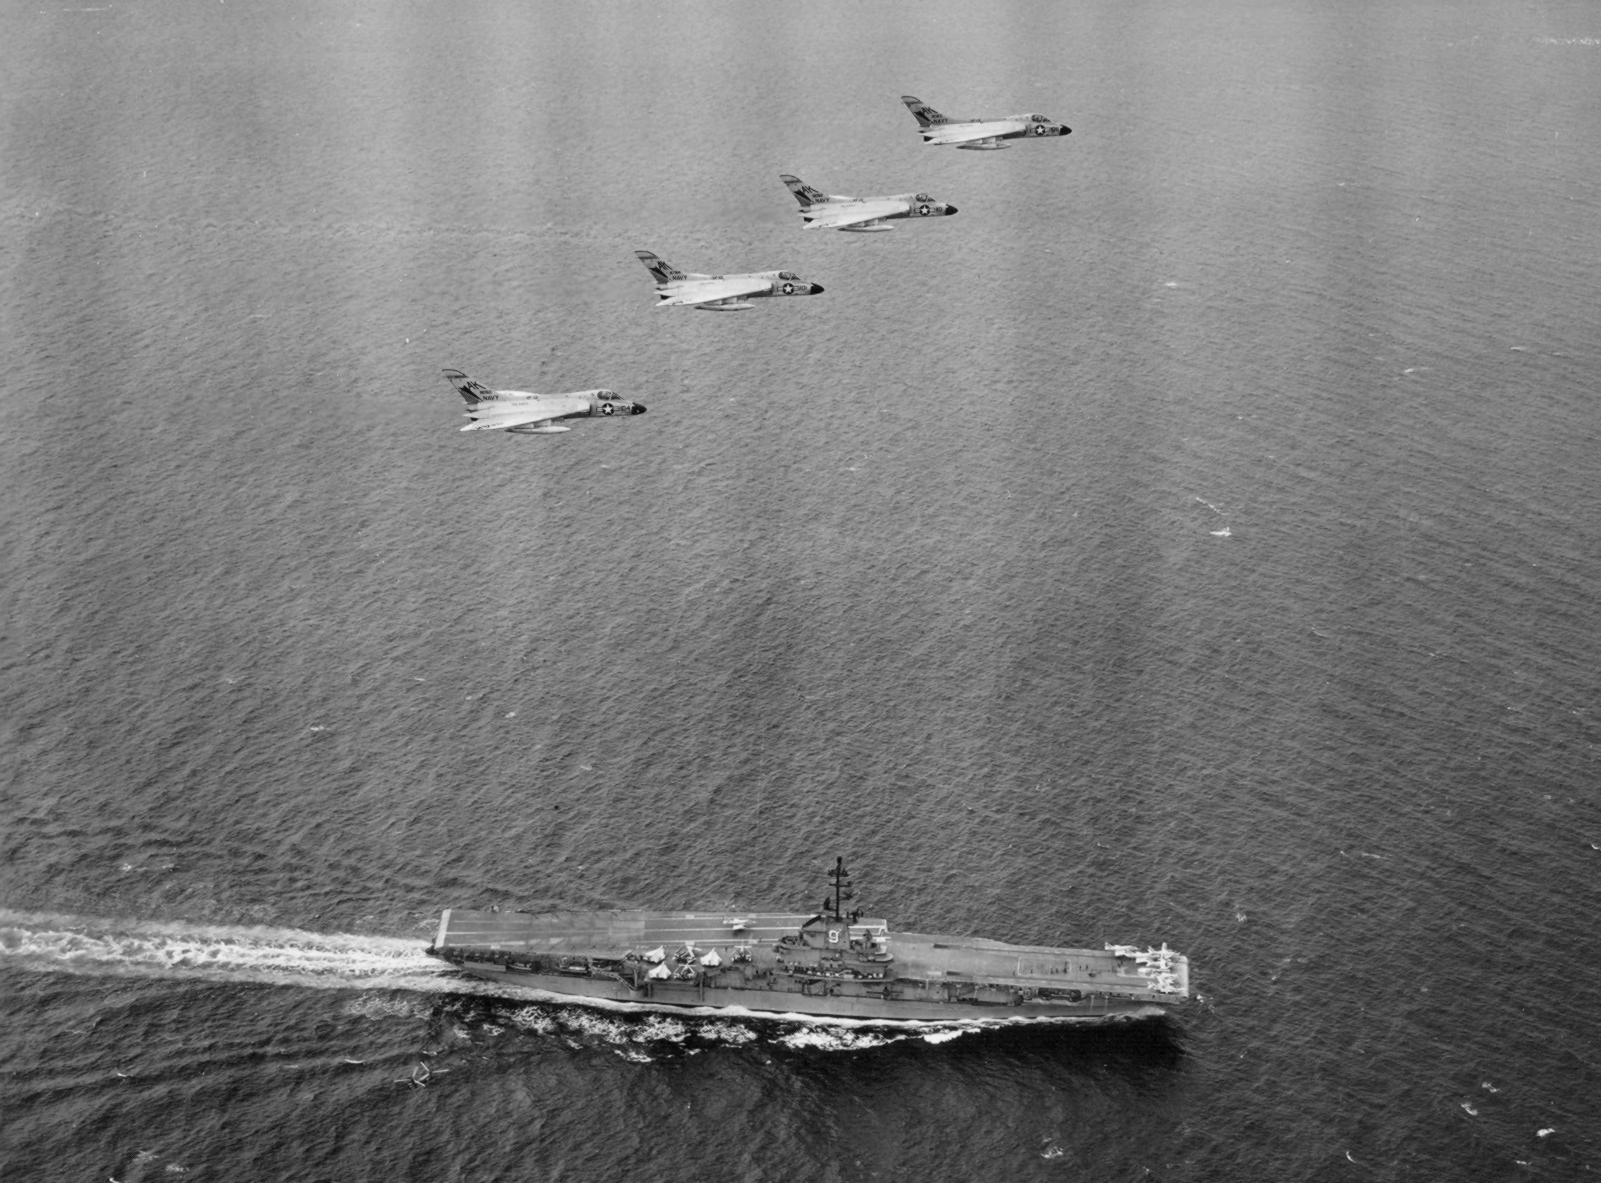 Douglas F4D-1 Skyray fighters lying over USS Essex in the Mediterranean Sea, 9 Jan 1960